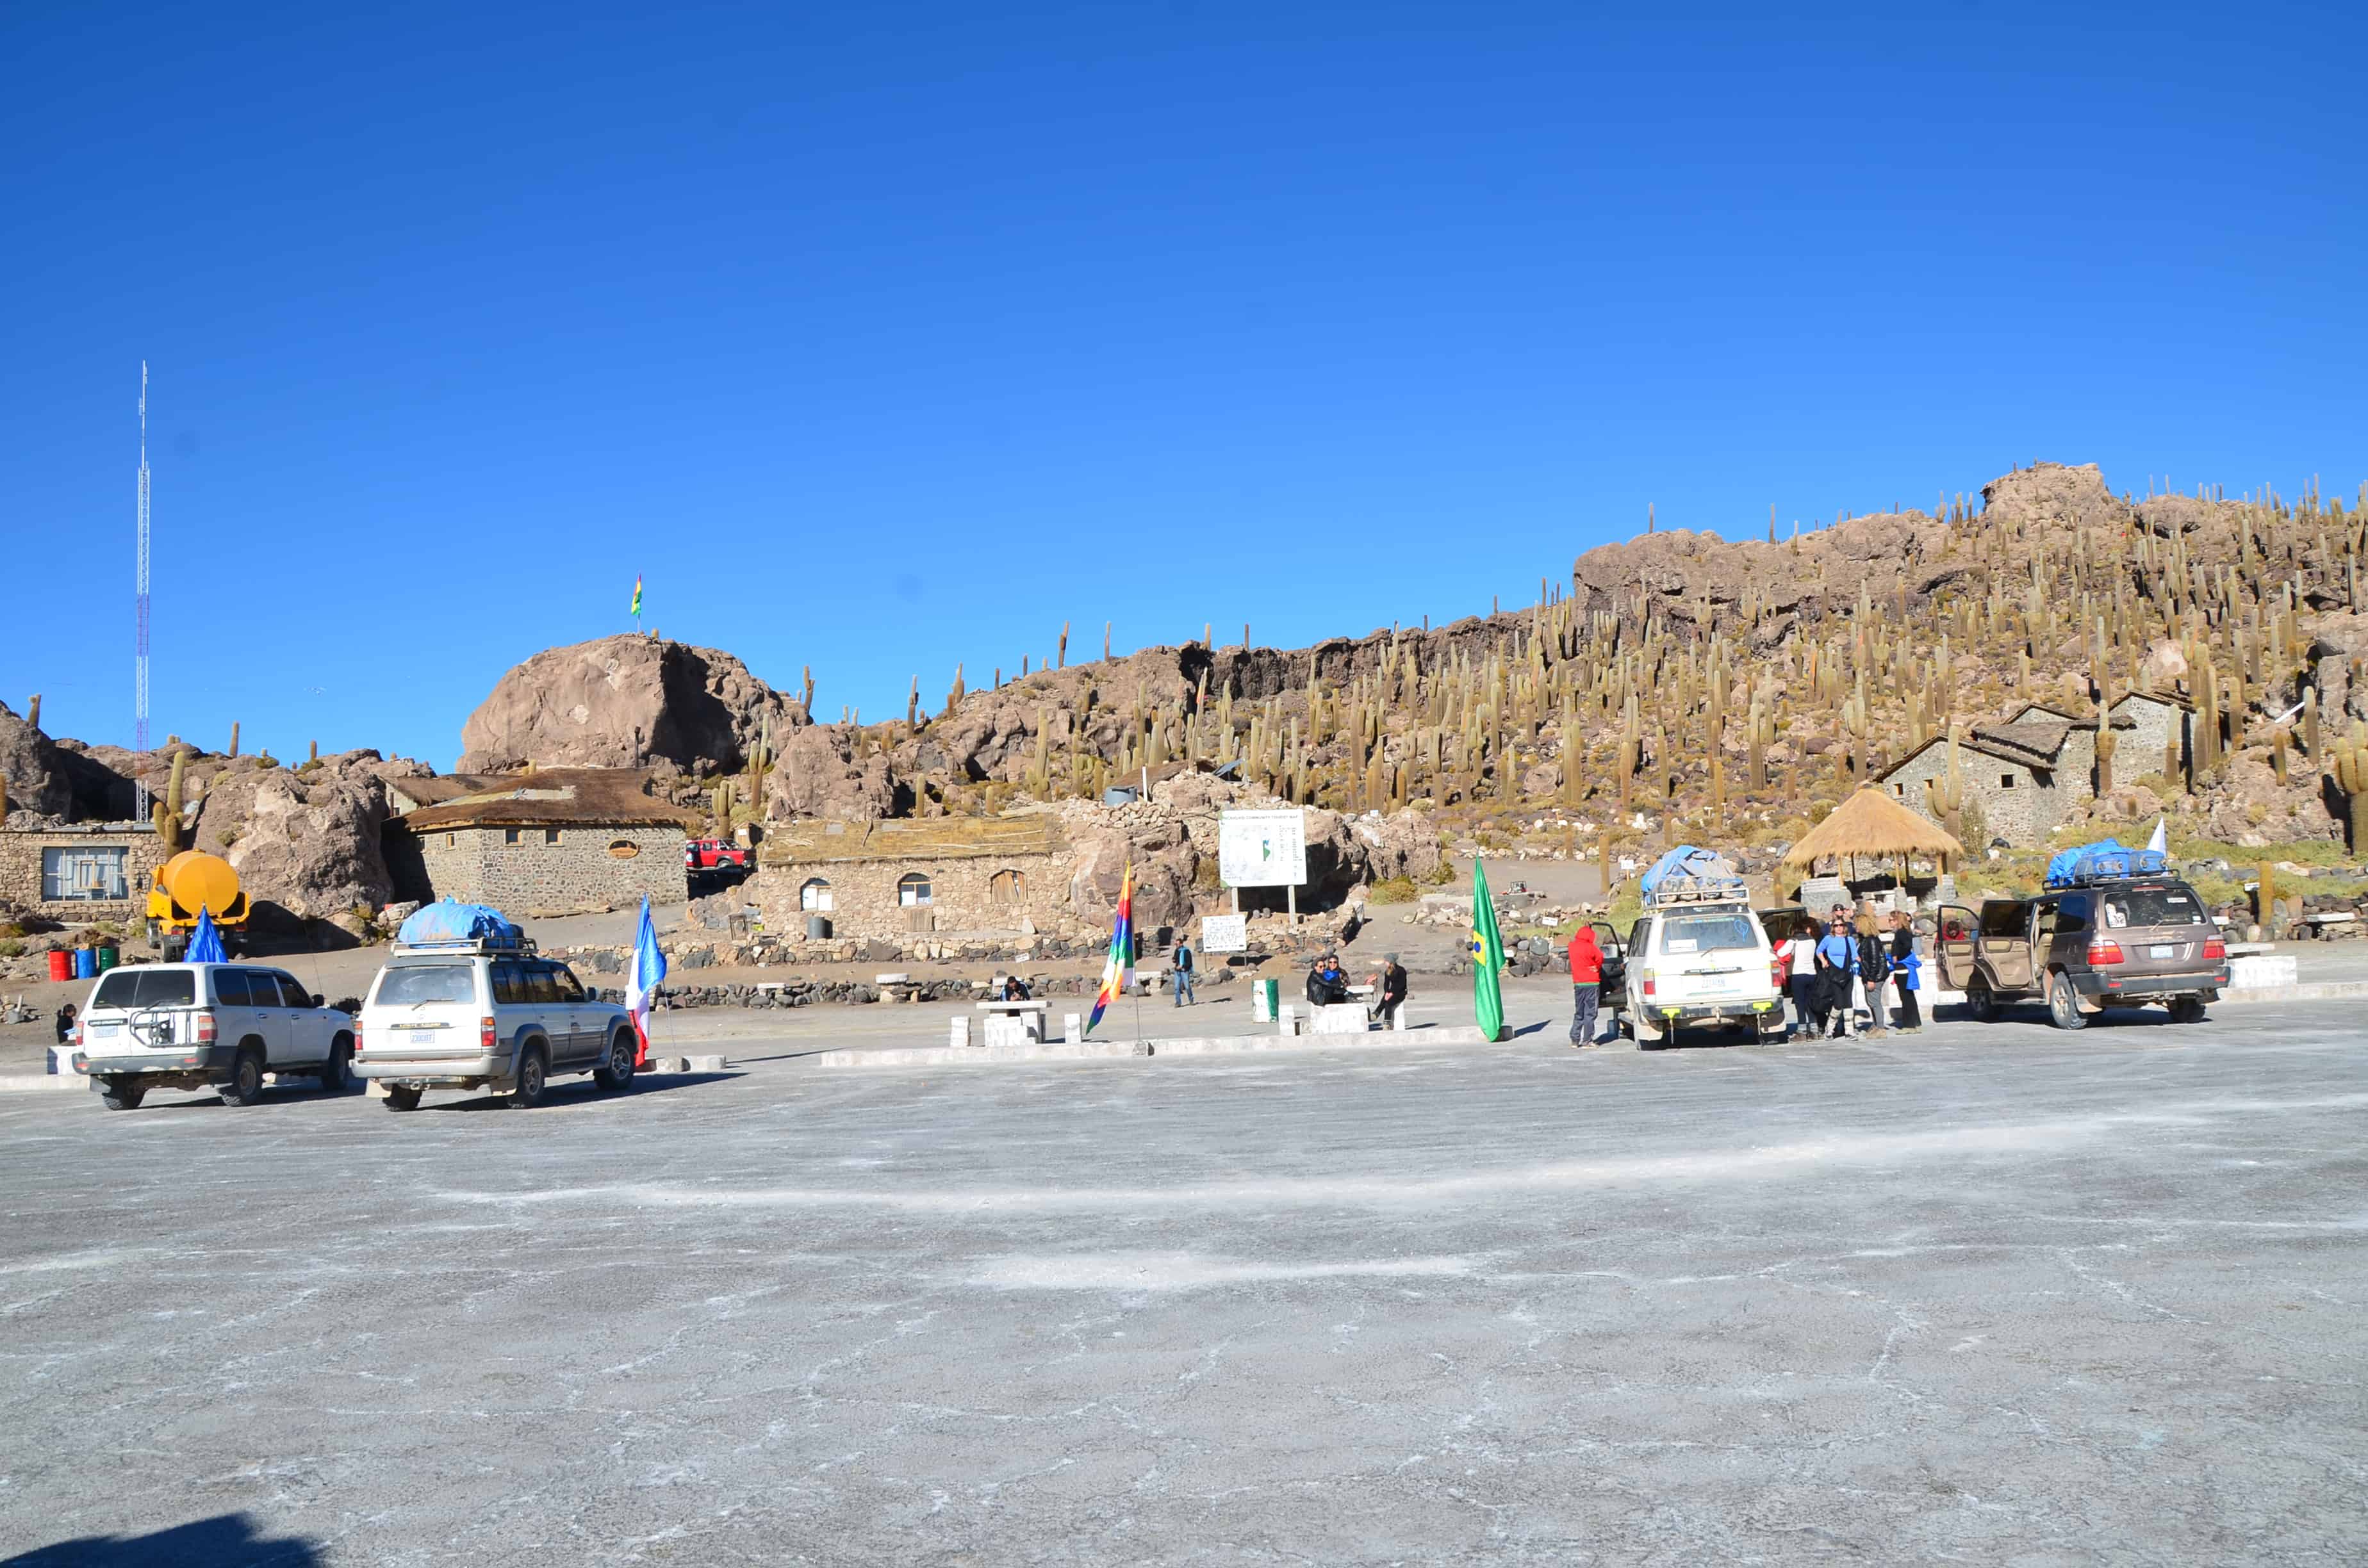 Incahuasi in Uyuni Salt Flat, Bolivia